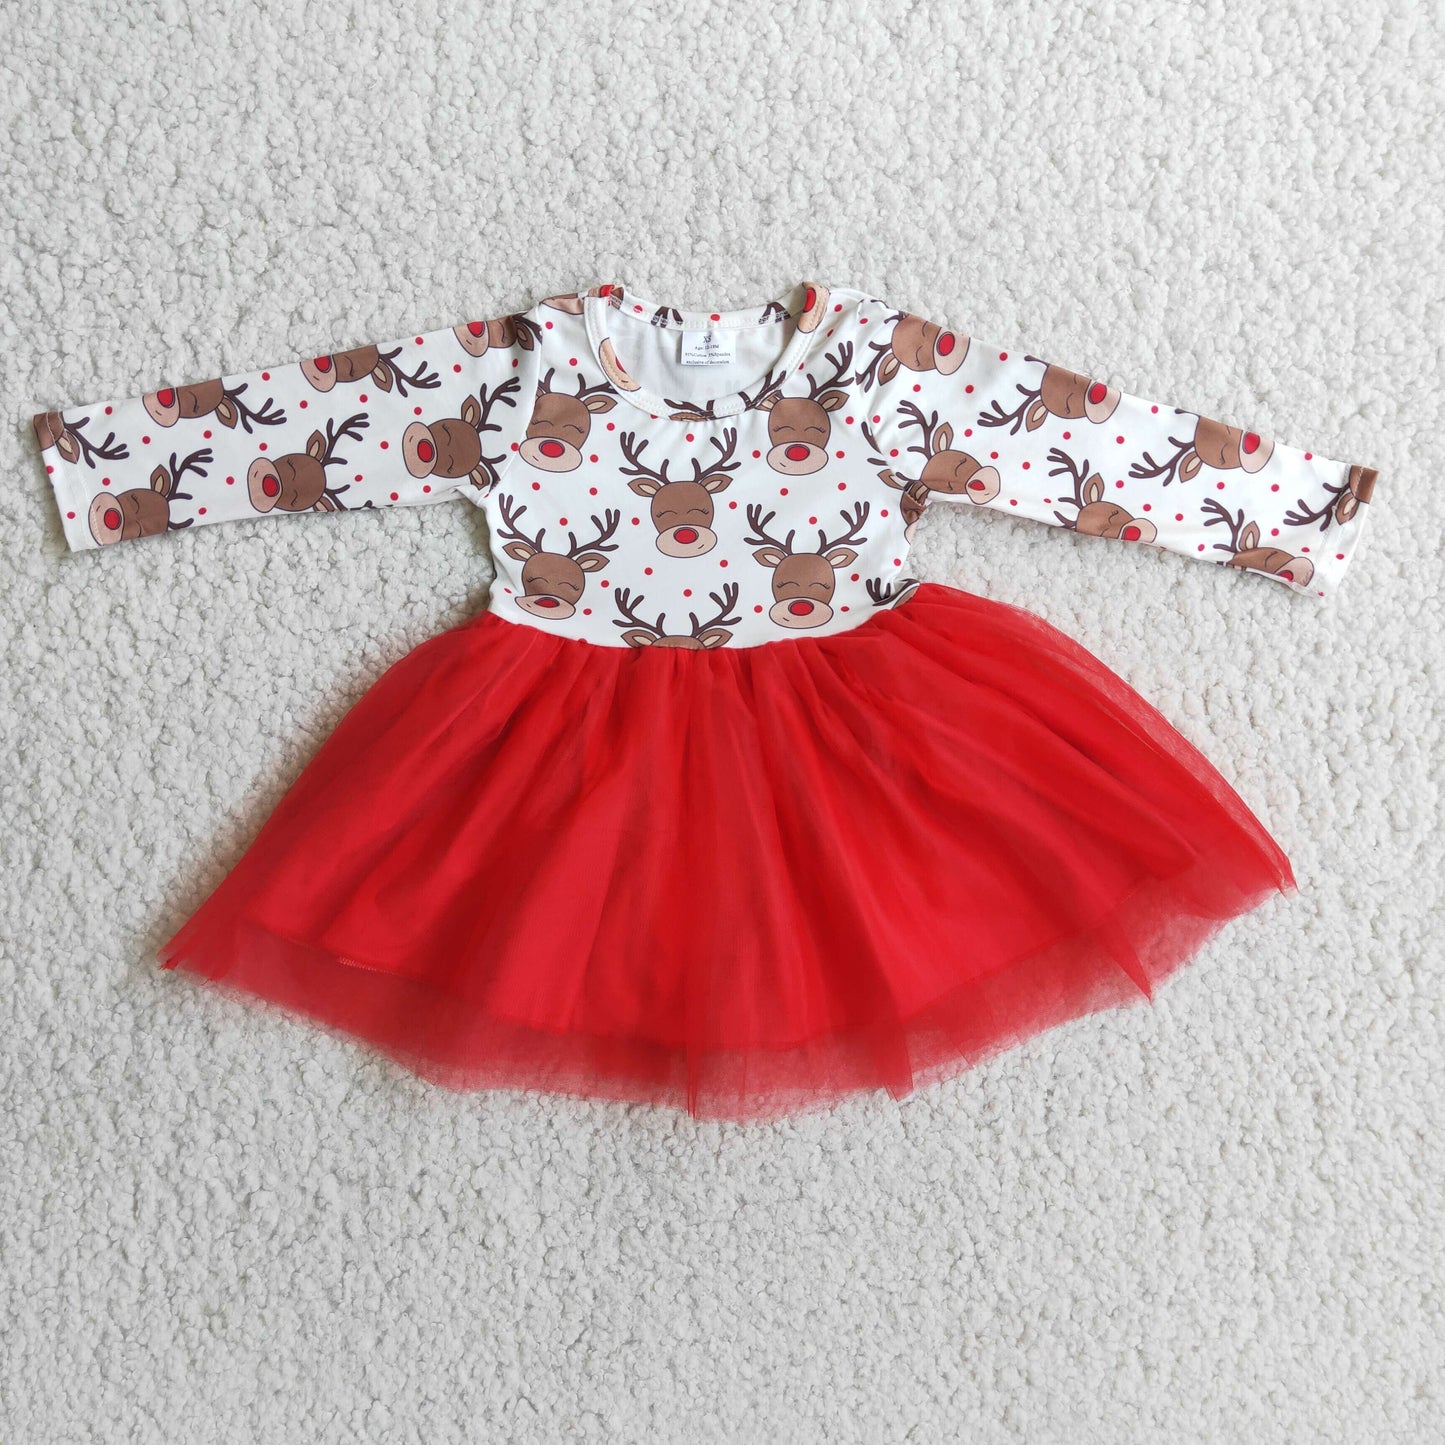 Reindeer print red tulle girls Christmas dresses